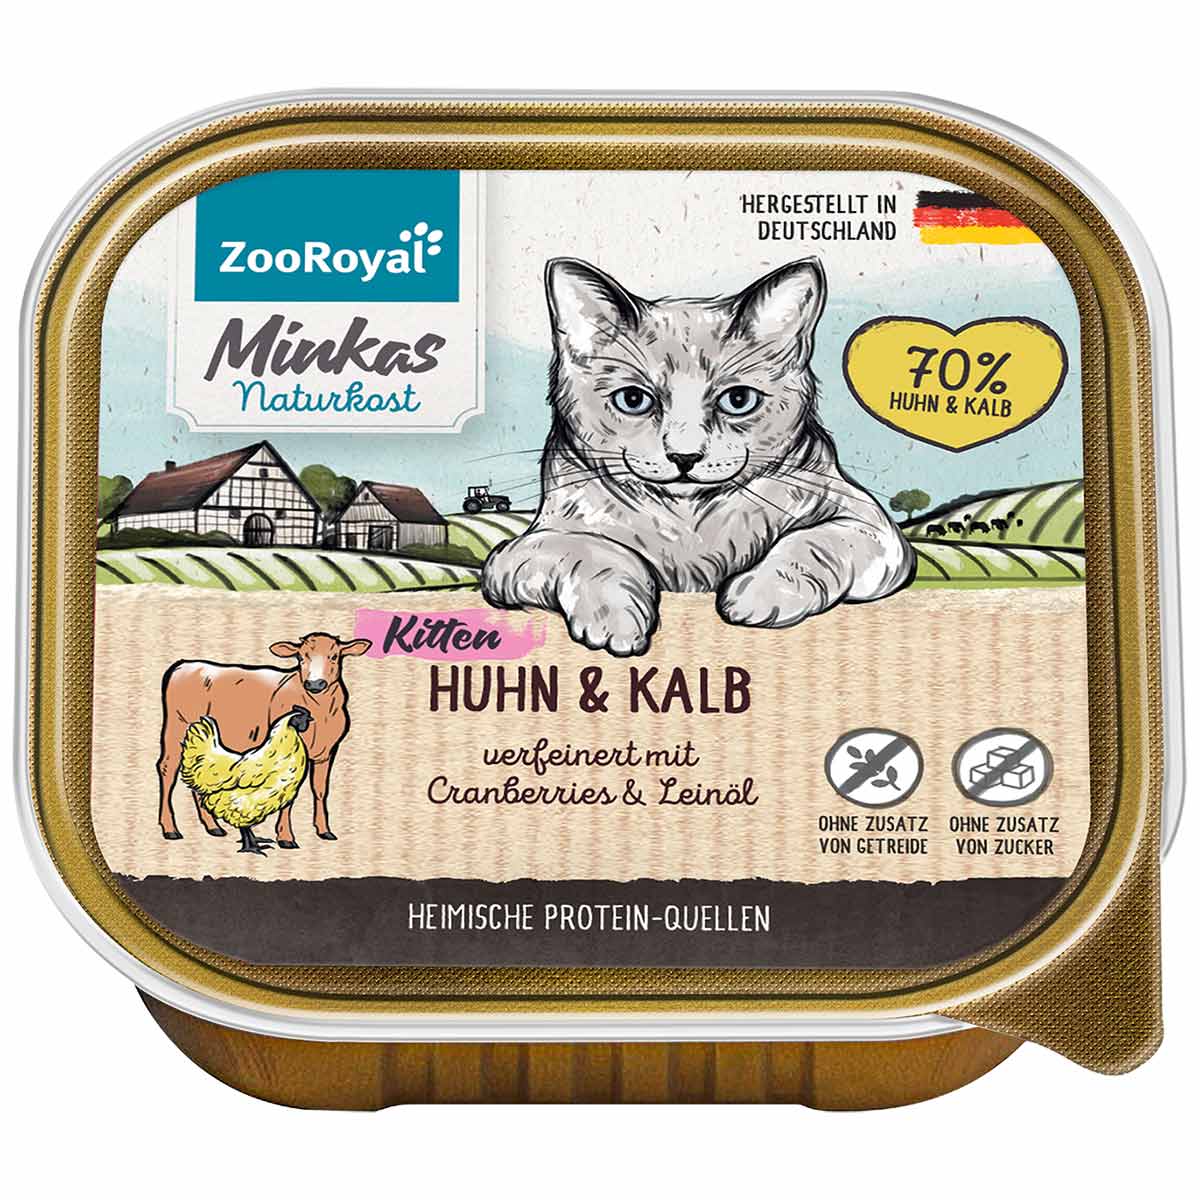 ZooRoyal Minkas Naturkost Kitten Huhn und Kalb mit Cranberries